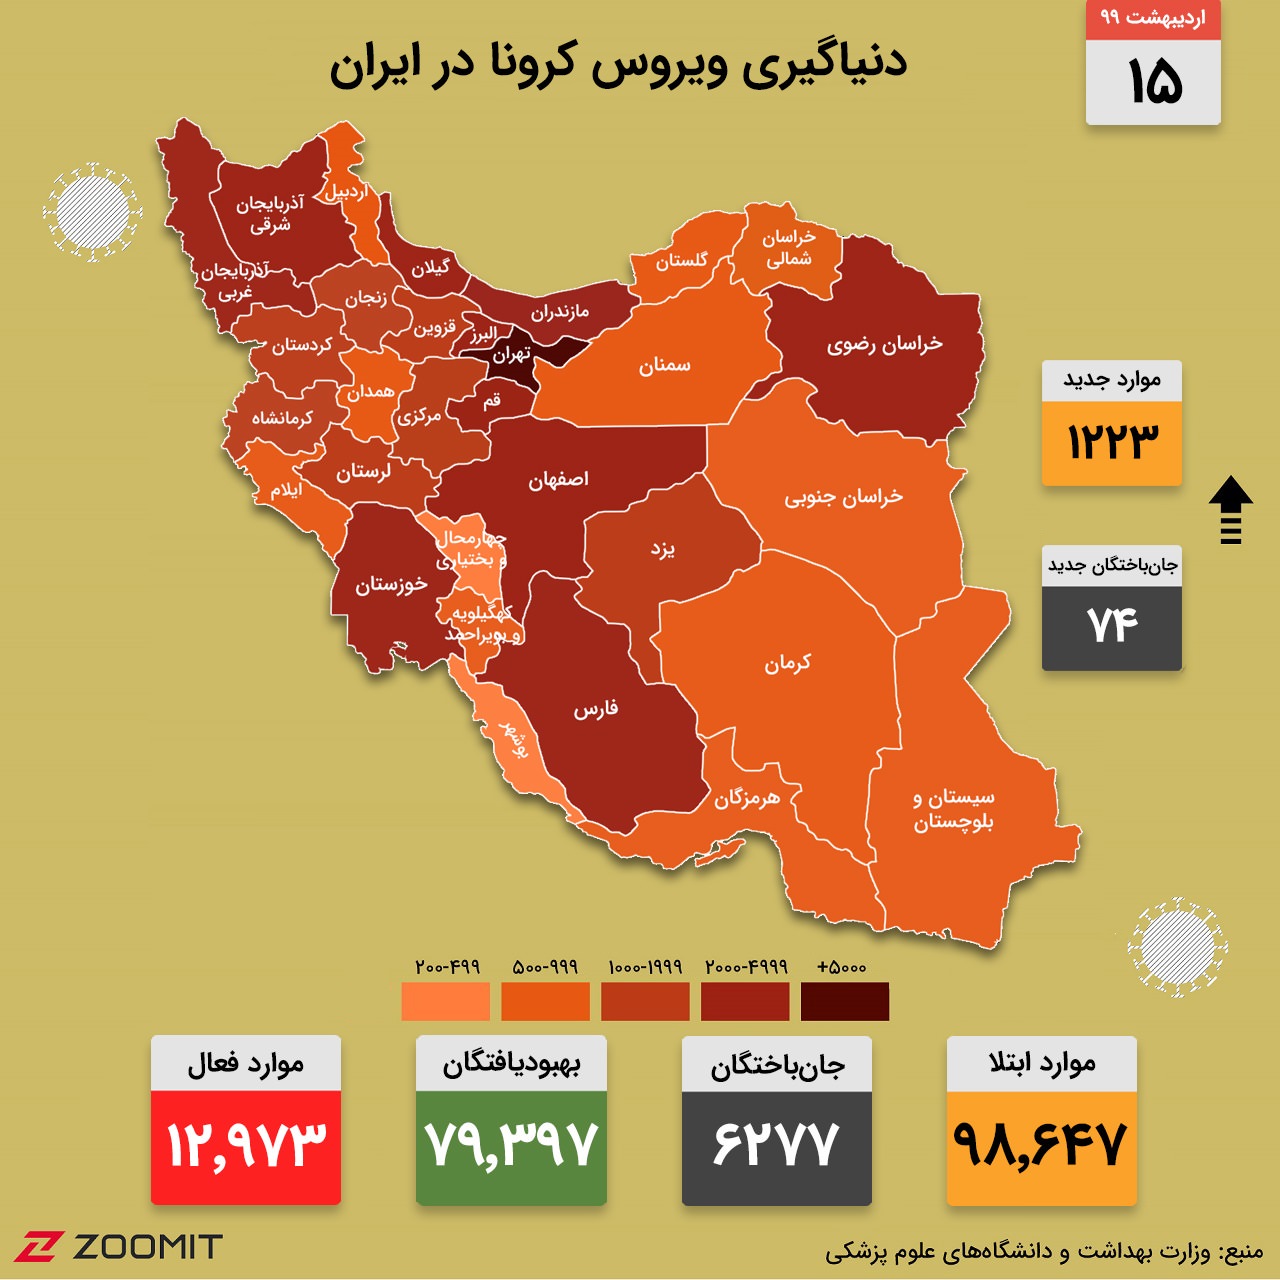 نقشه کرونا در ایران (۱۵ <strong>اردیبهشت</strong> ۹۹)